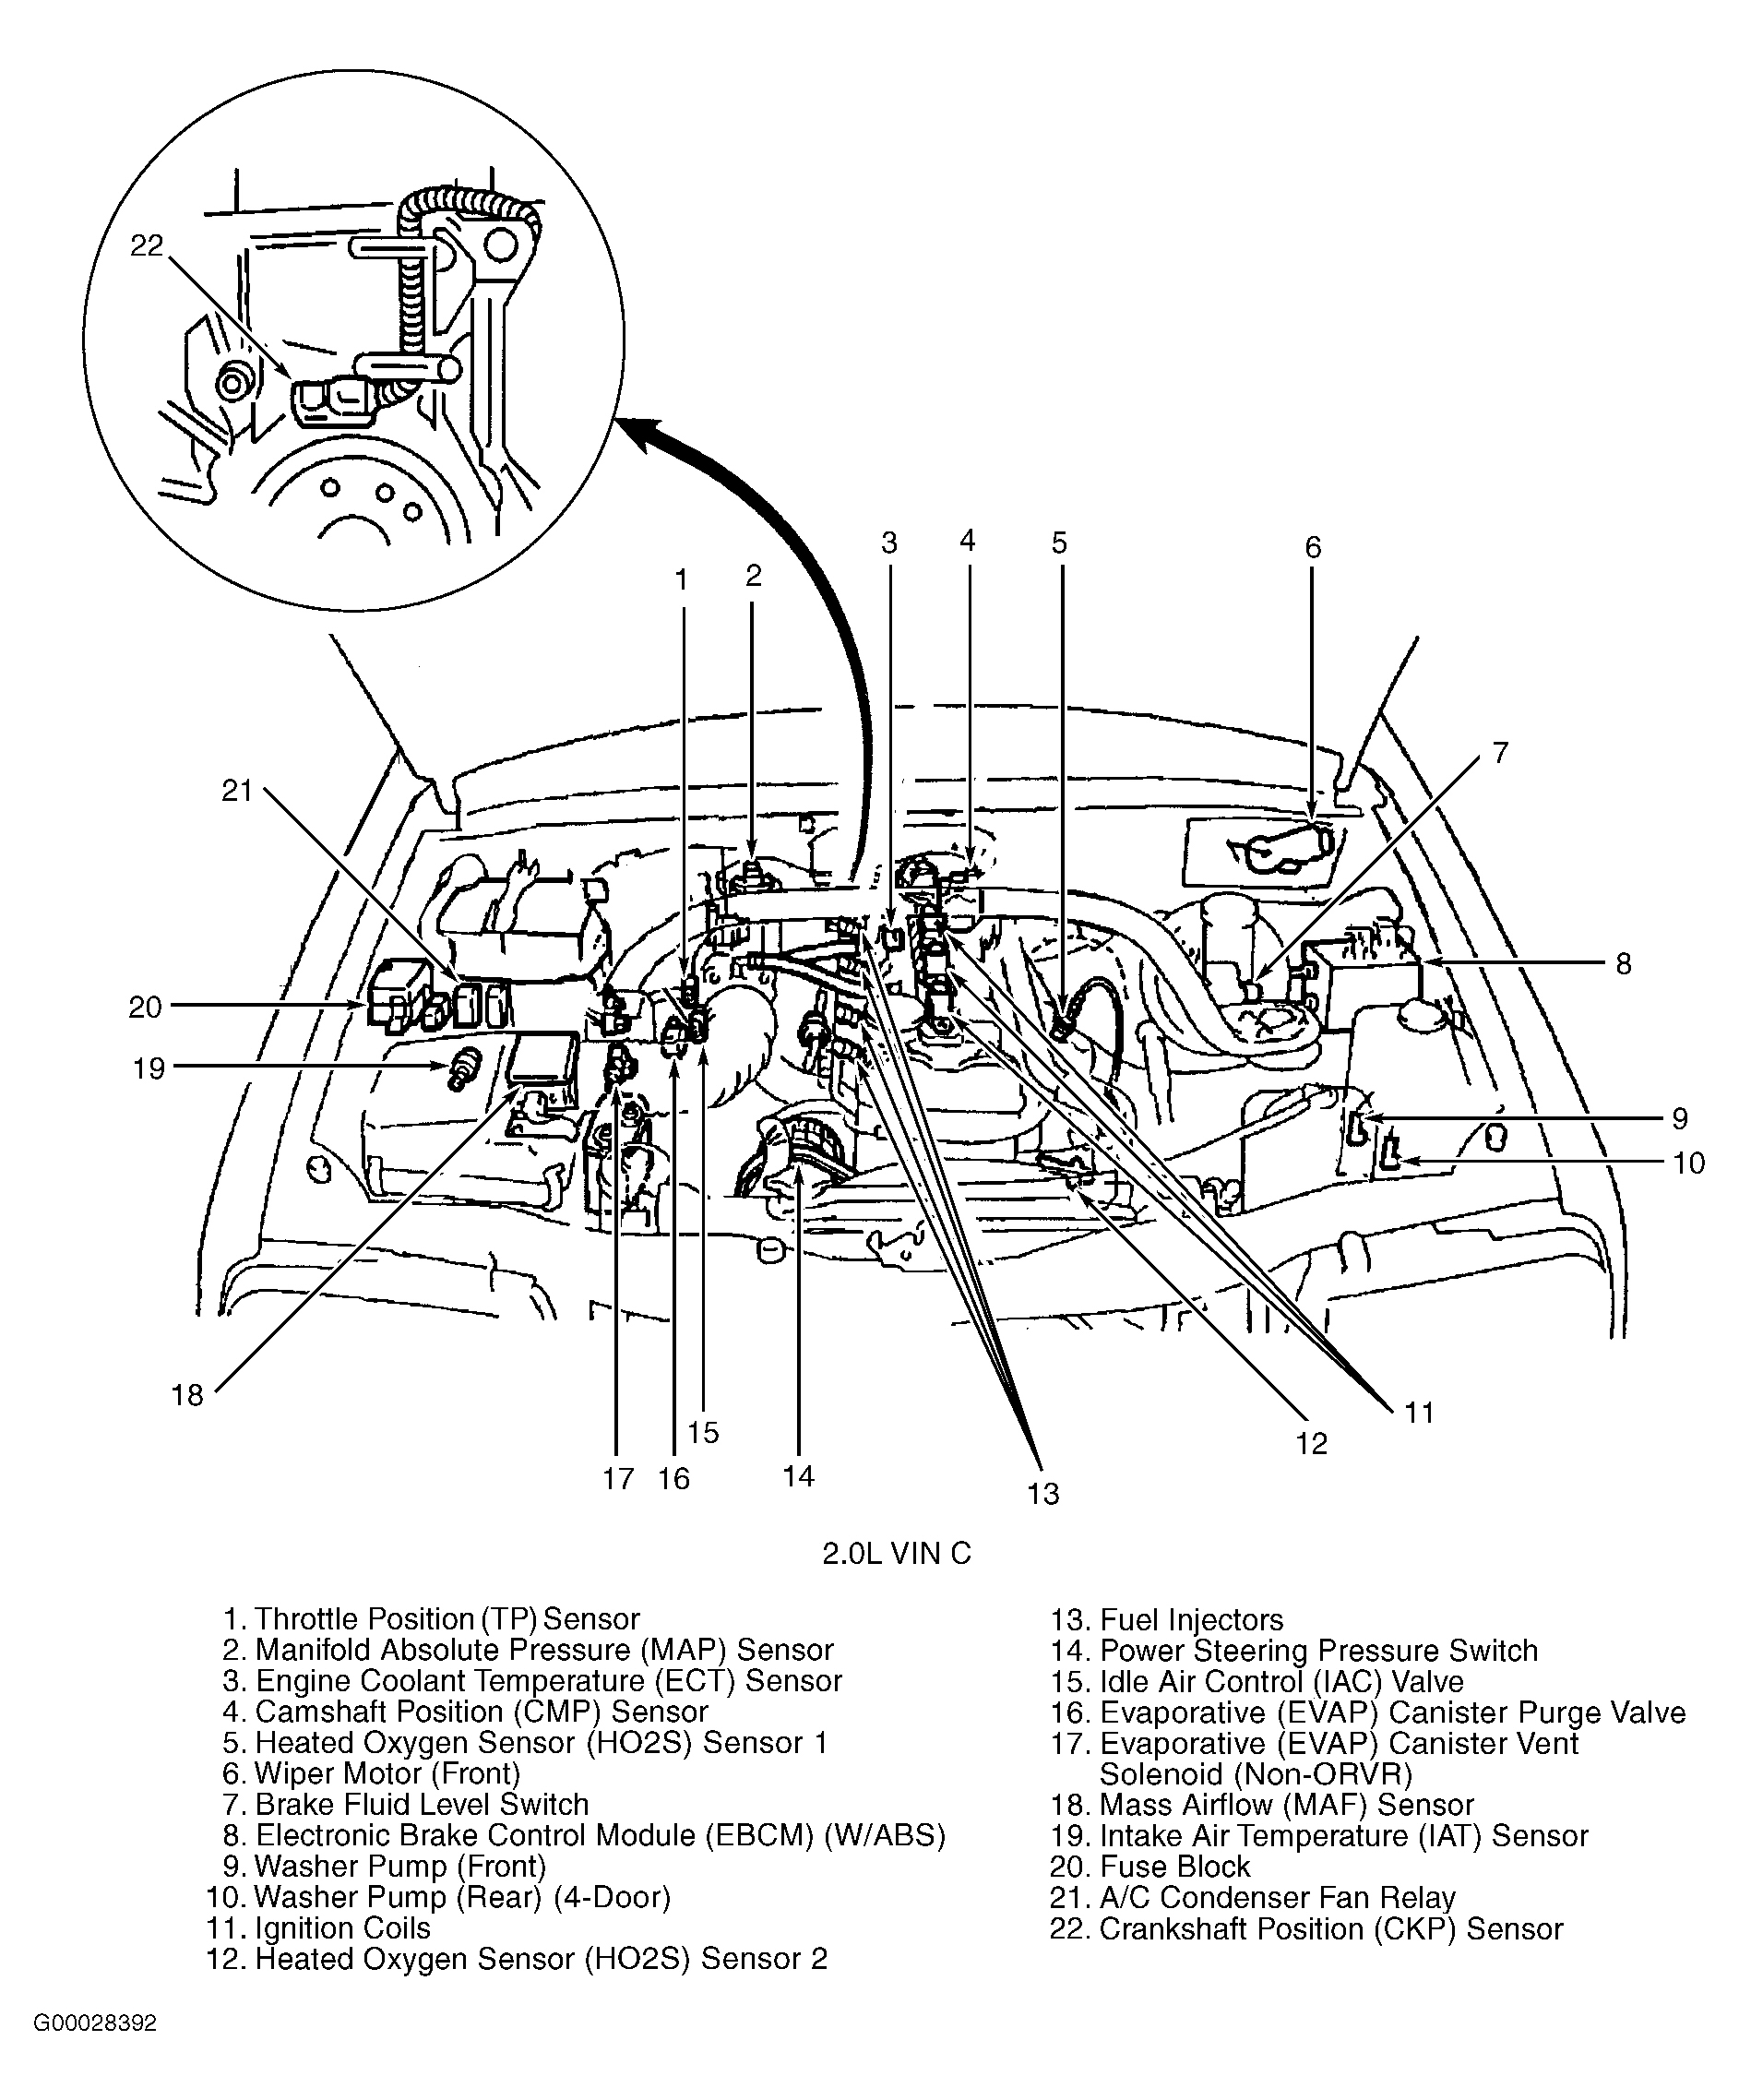 Chevrolet Tracker 2003 - Component Locations -  Engine Compartment (2.0L VIN C)